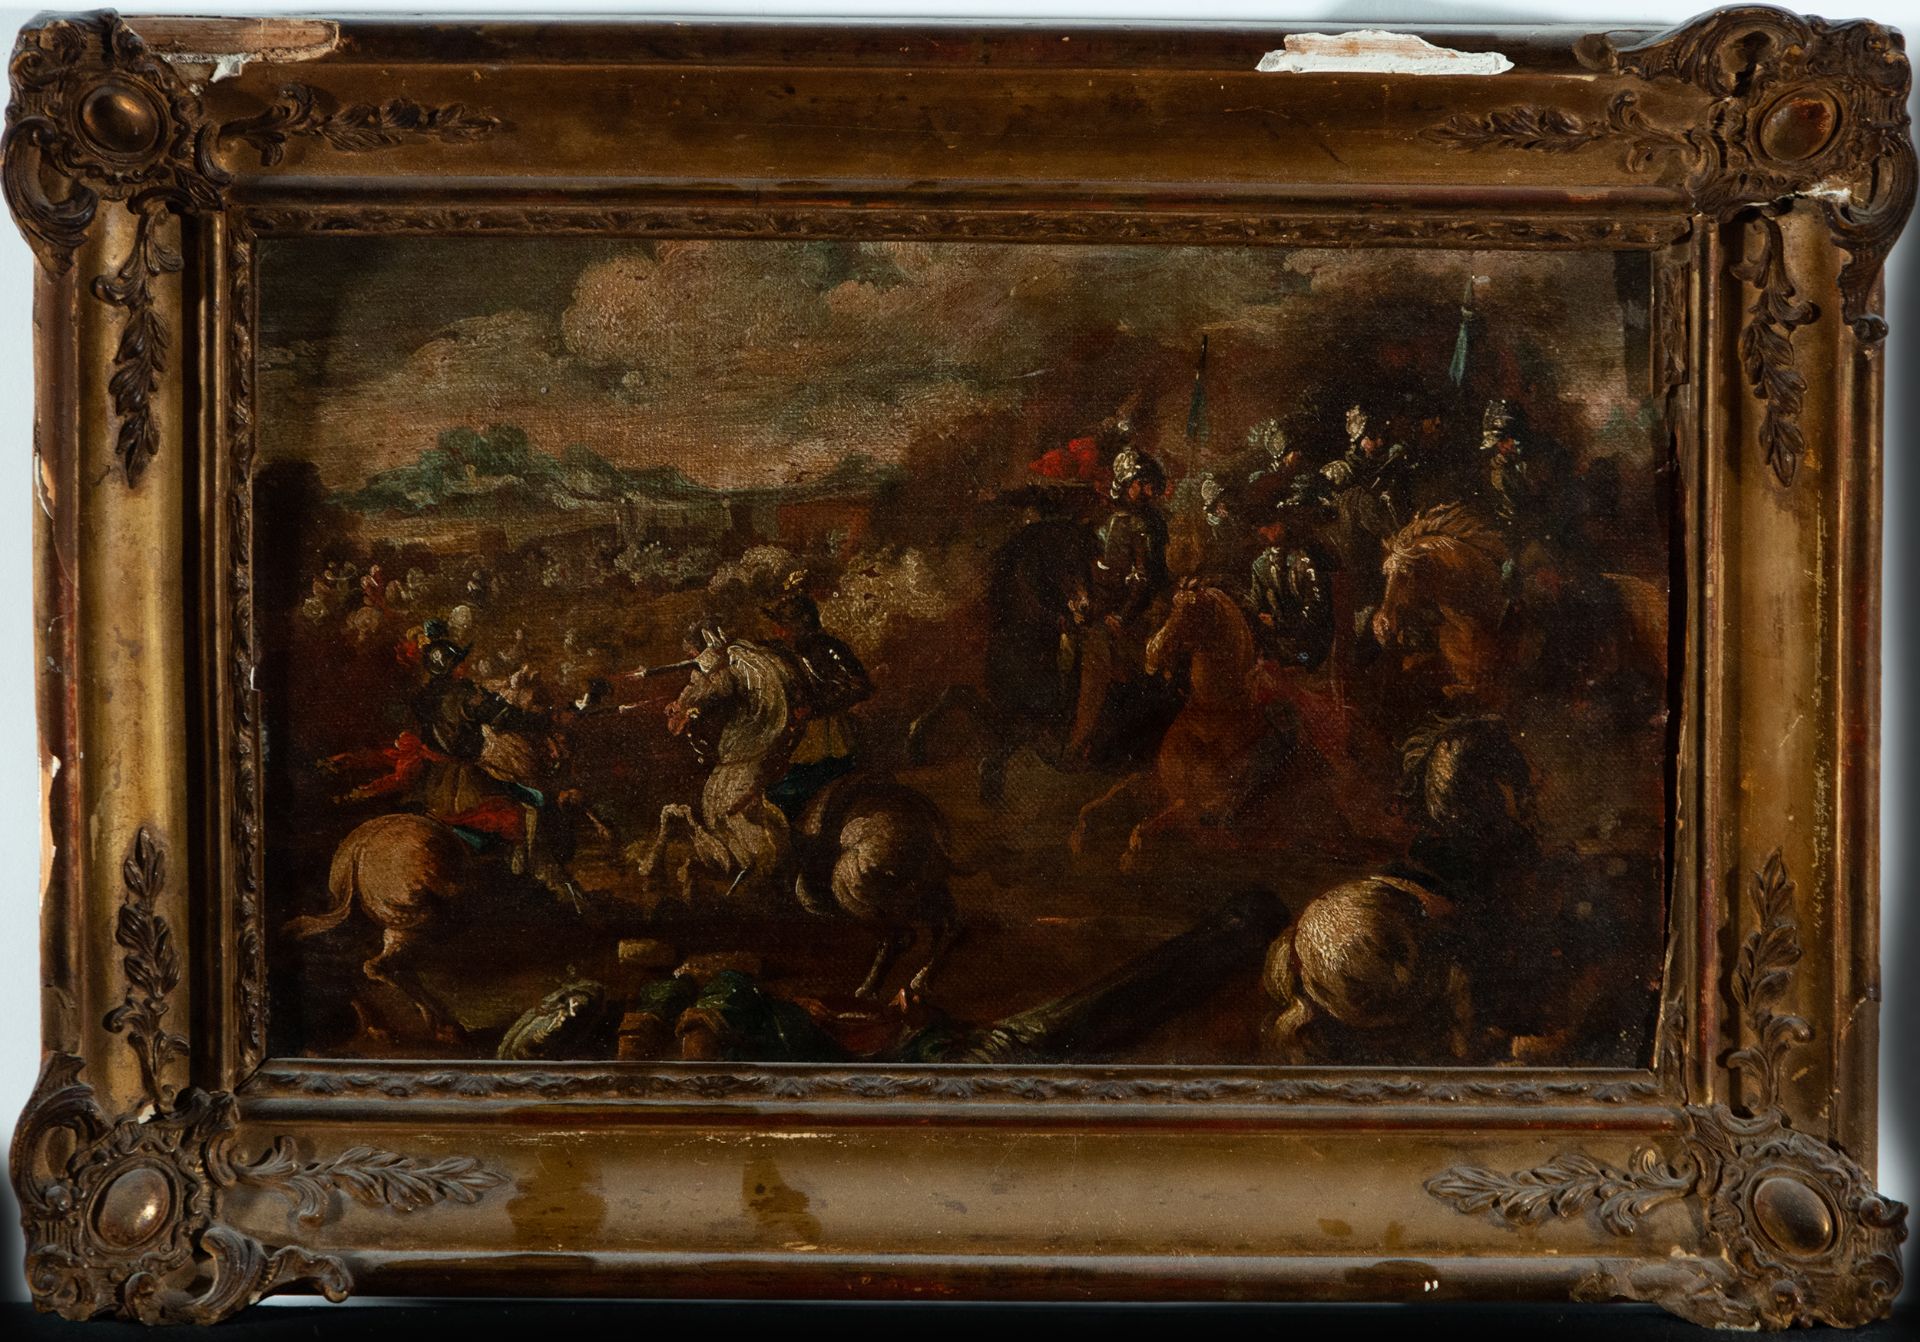 Cavalry Charge, Battle scene, Italian or Austrian school, 18th century